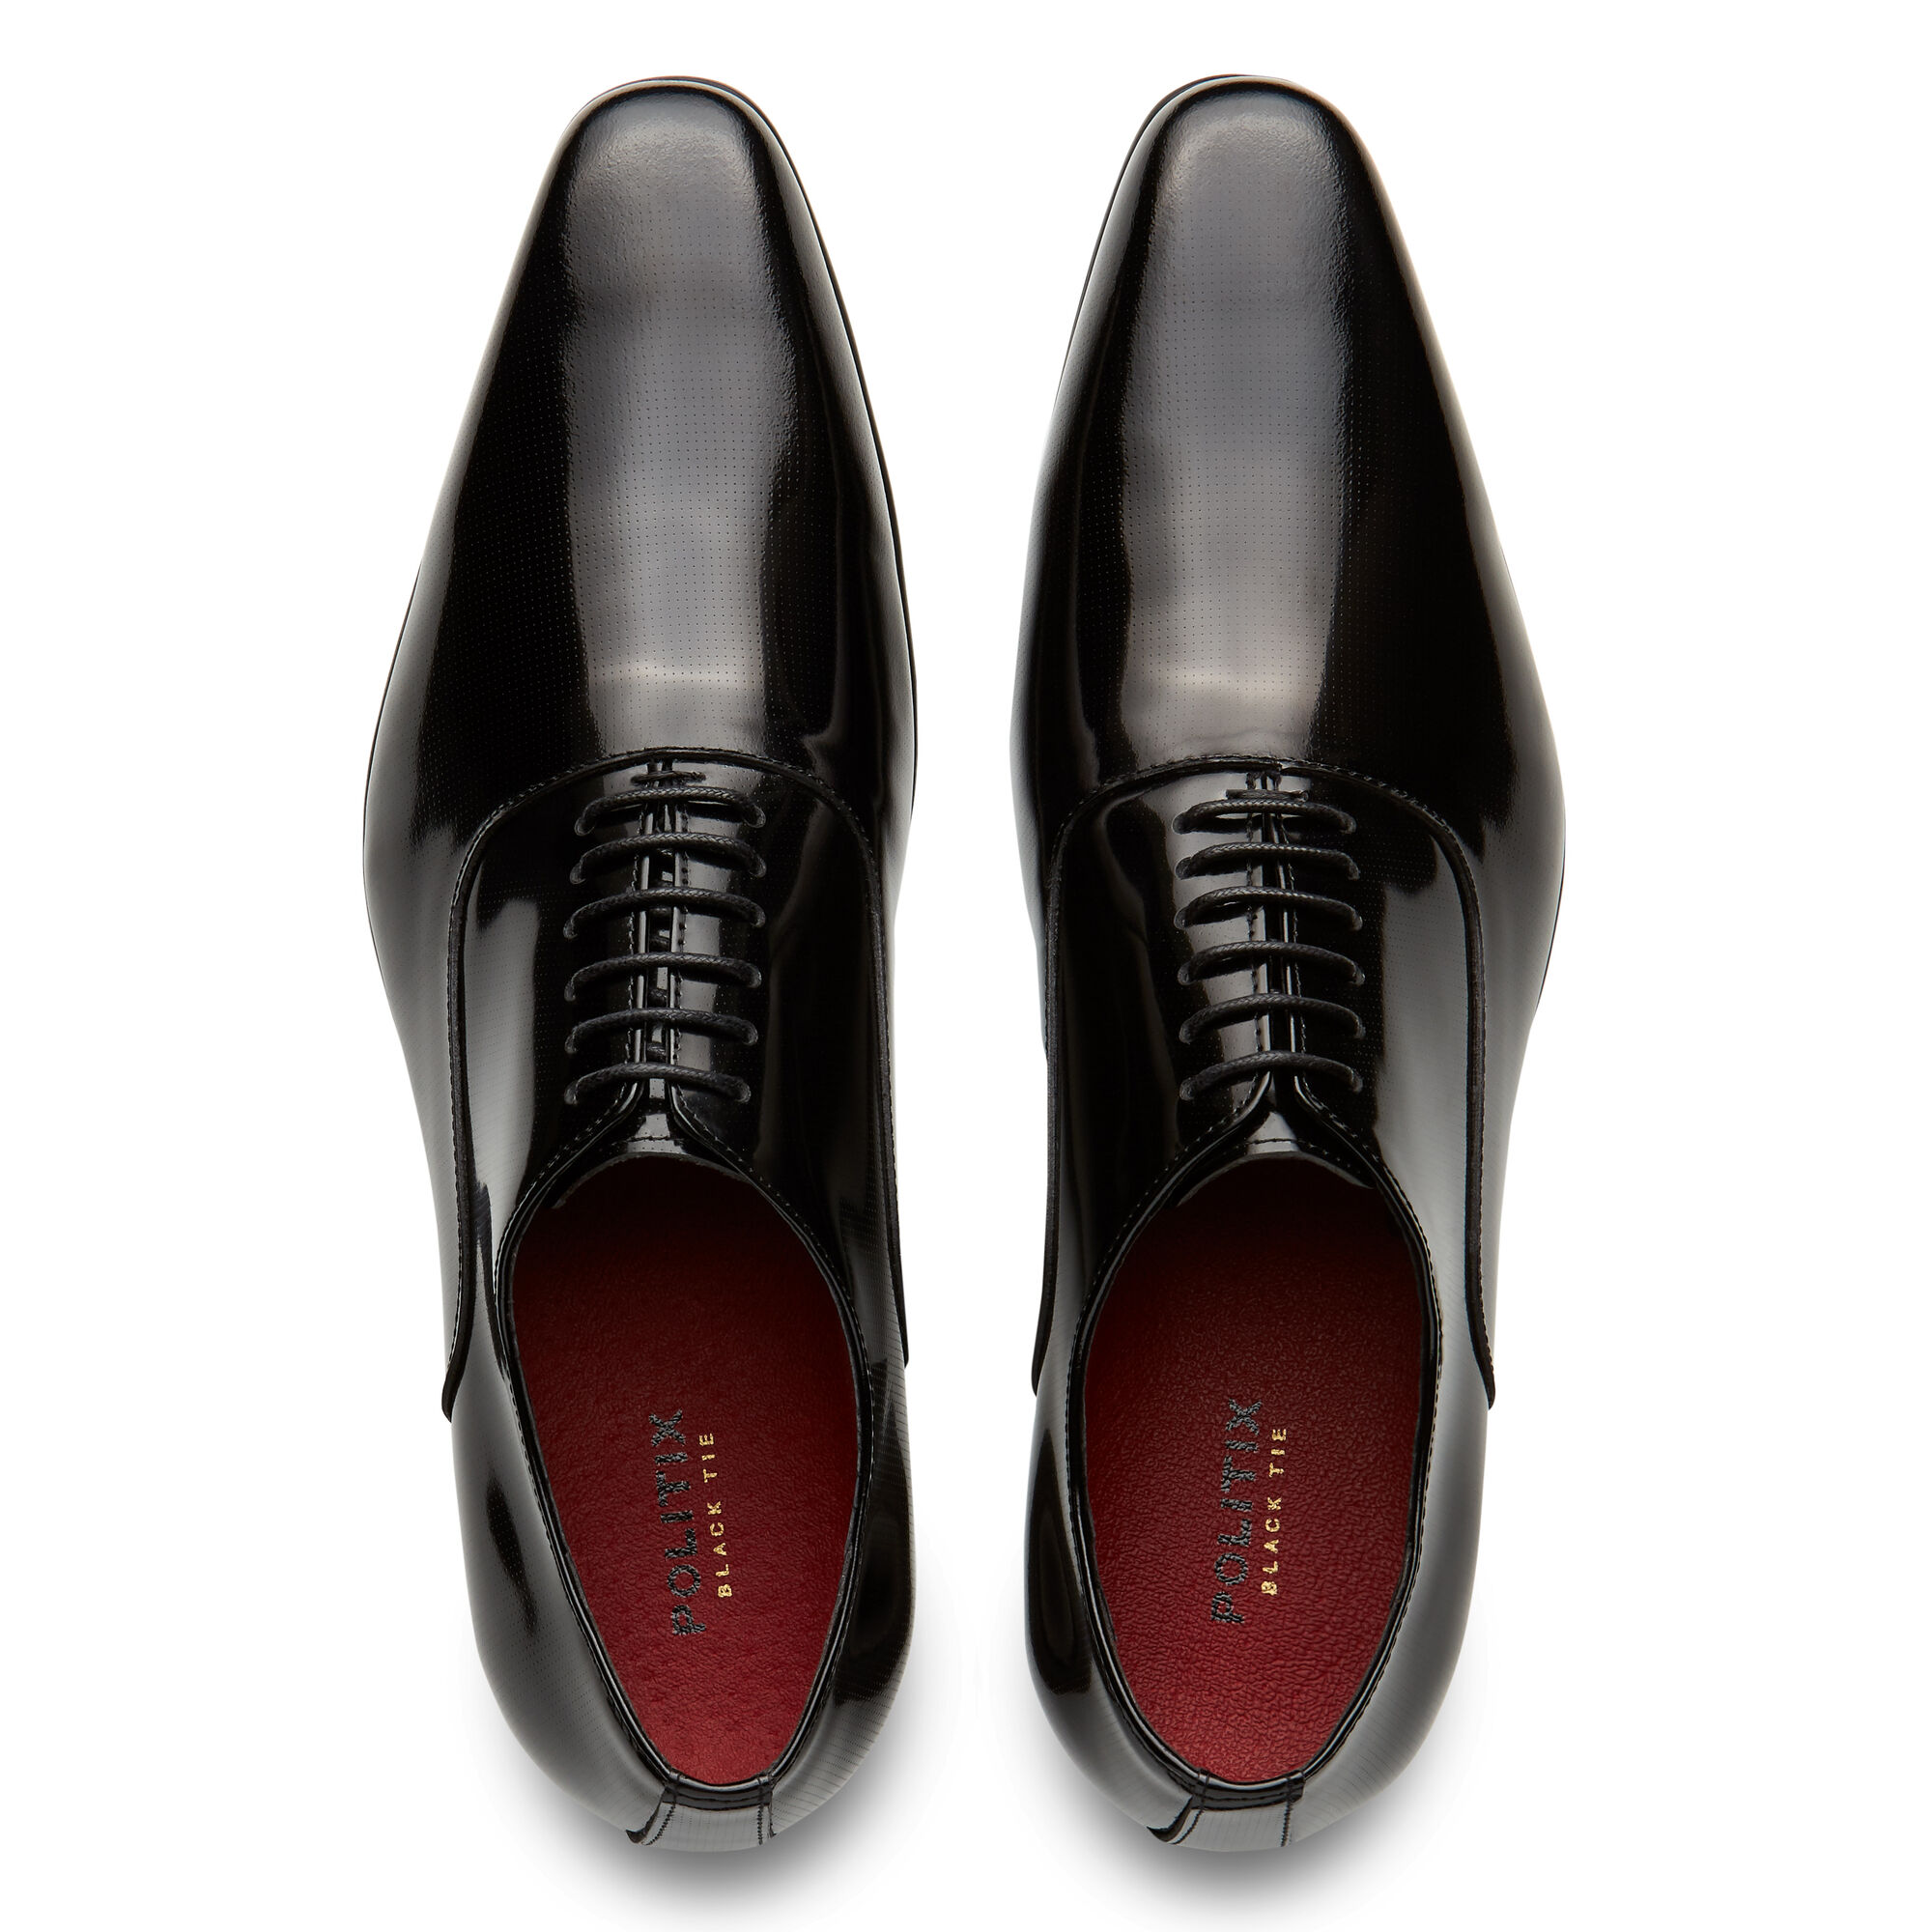 Searle - Black - Patent Leather Black Tie Shoe | Politix